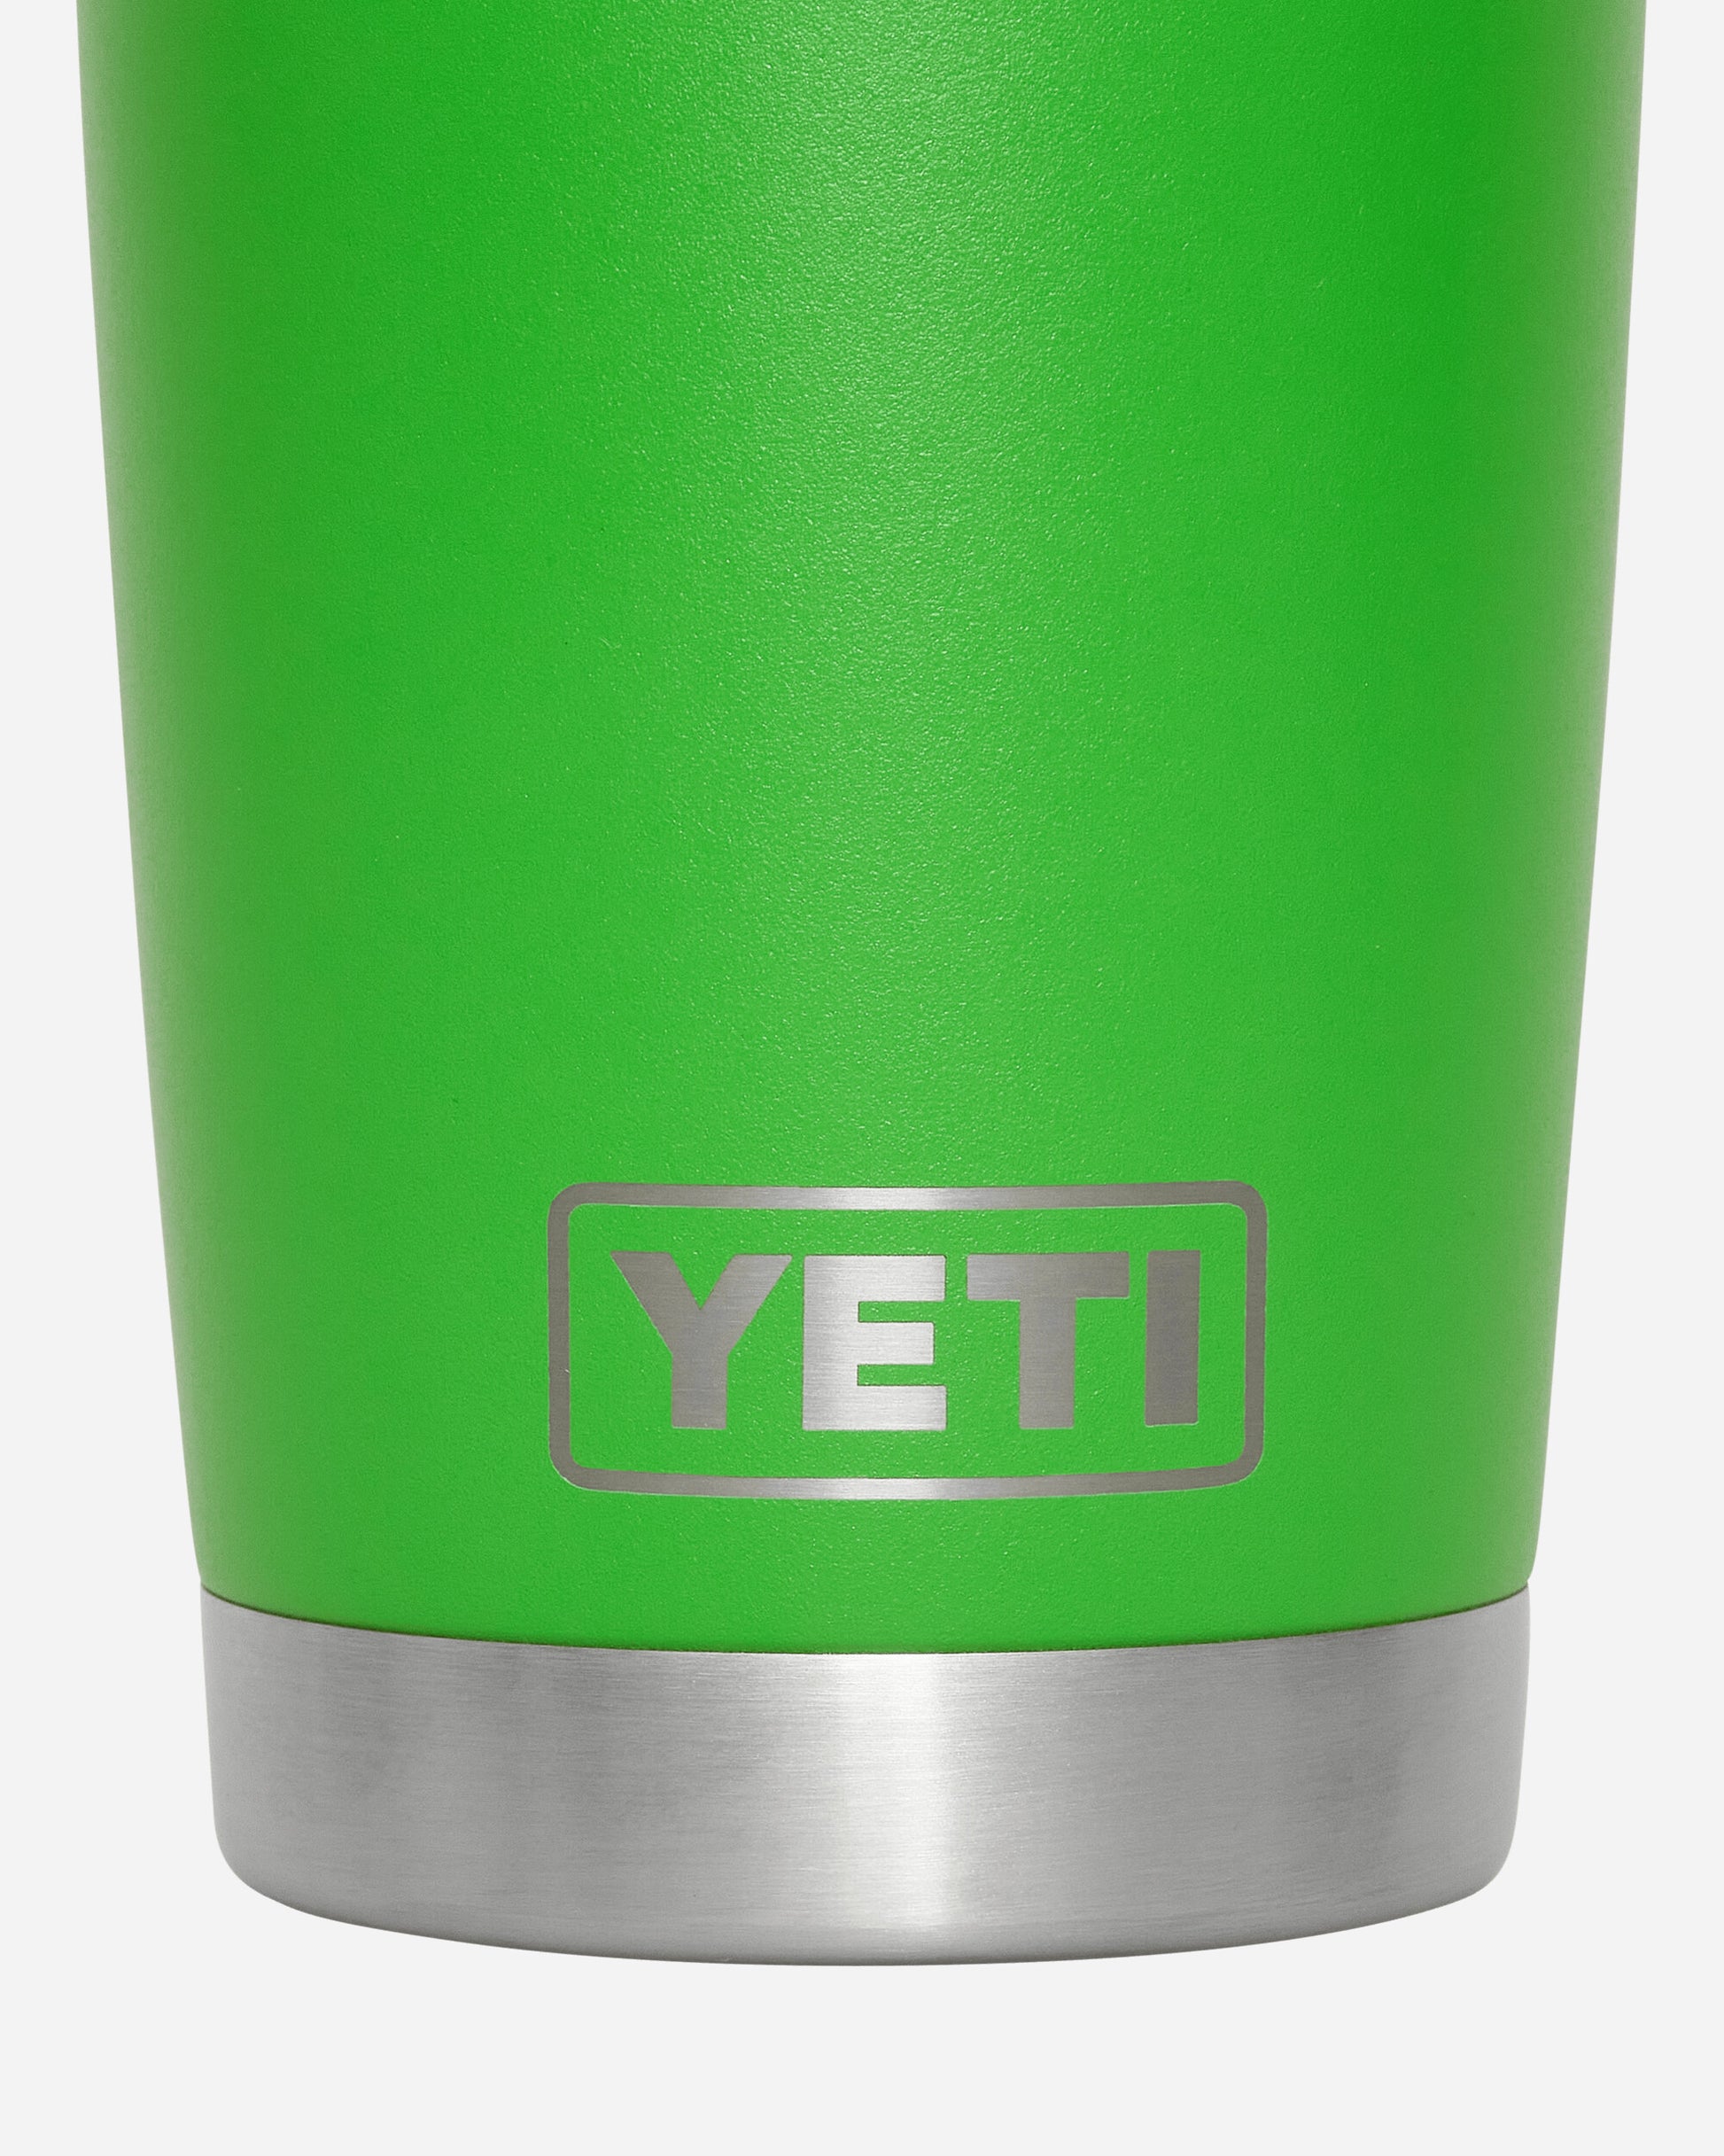 Yeti Rambler 20 Oz Tumbler Canopy Green Equipment Bottles and Bowls 0305 SPG